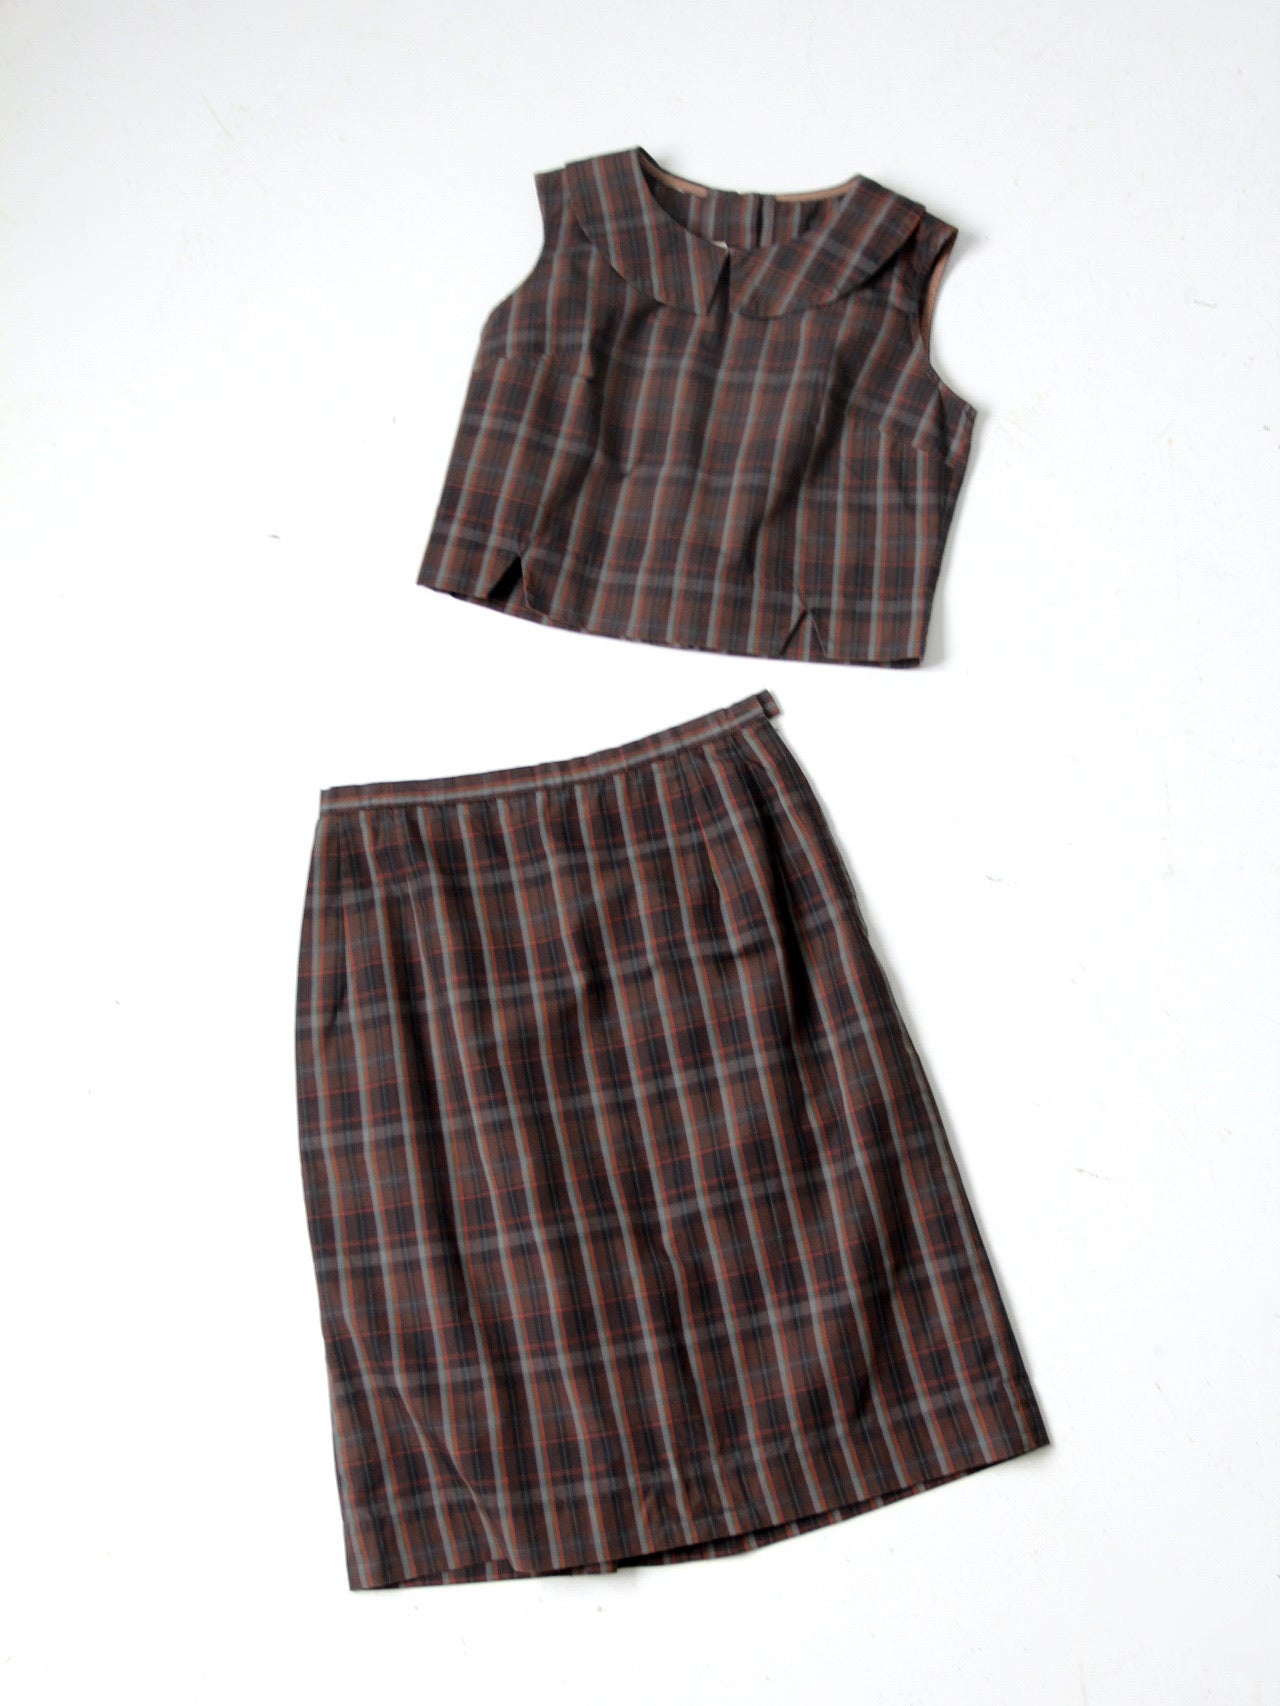 vintage 60s plaid skirt and top ensemble